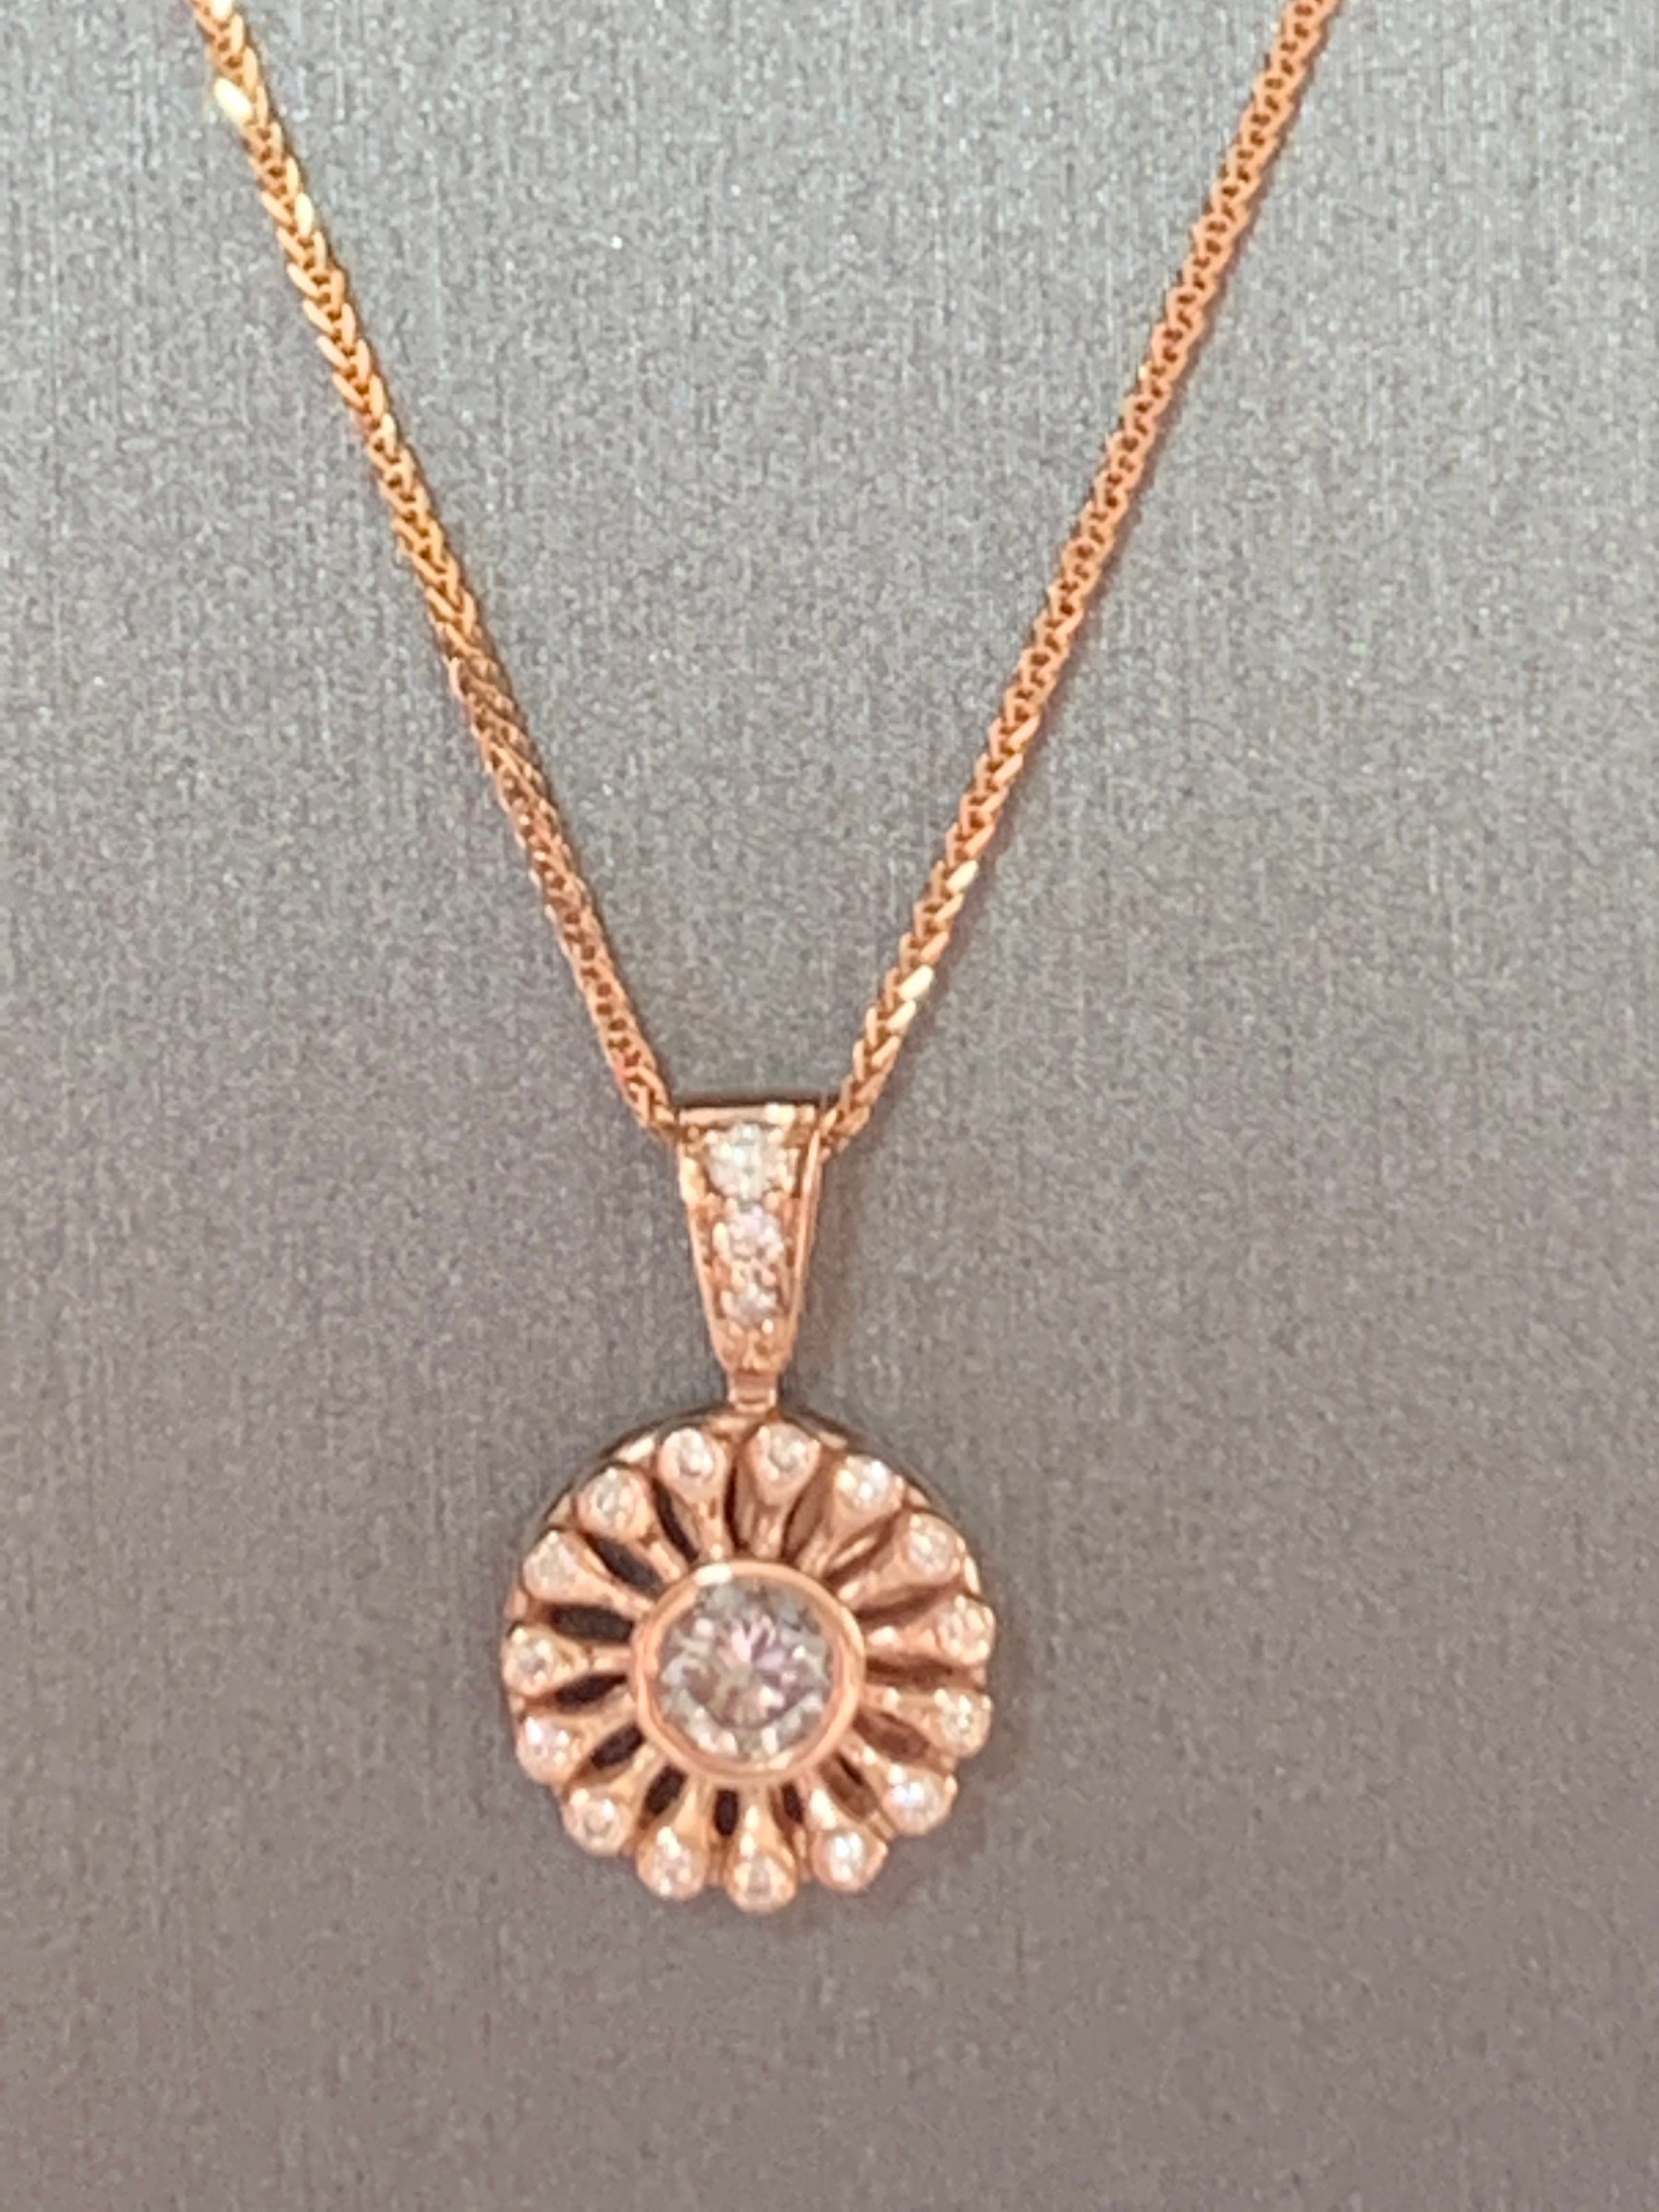 14K Gold and Diamond Sunburst Necklace - Etsy.de